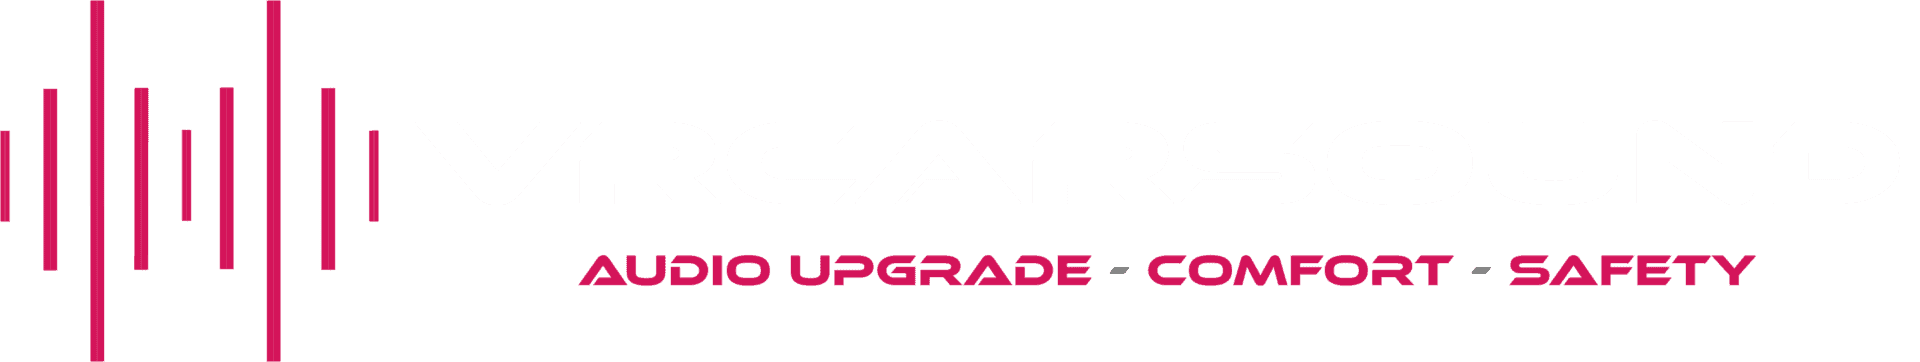 VR Car Sound logo